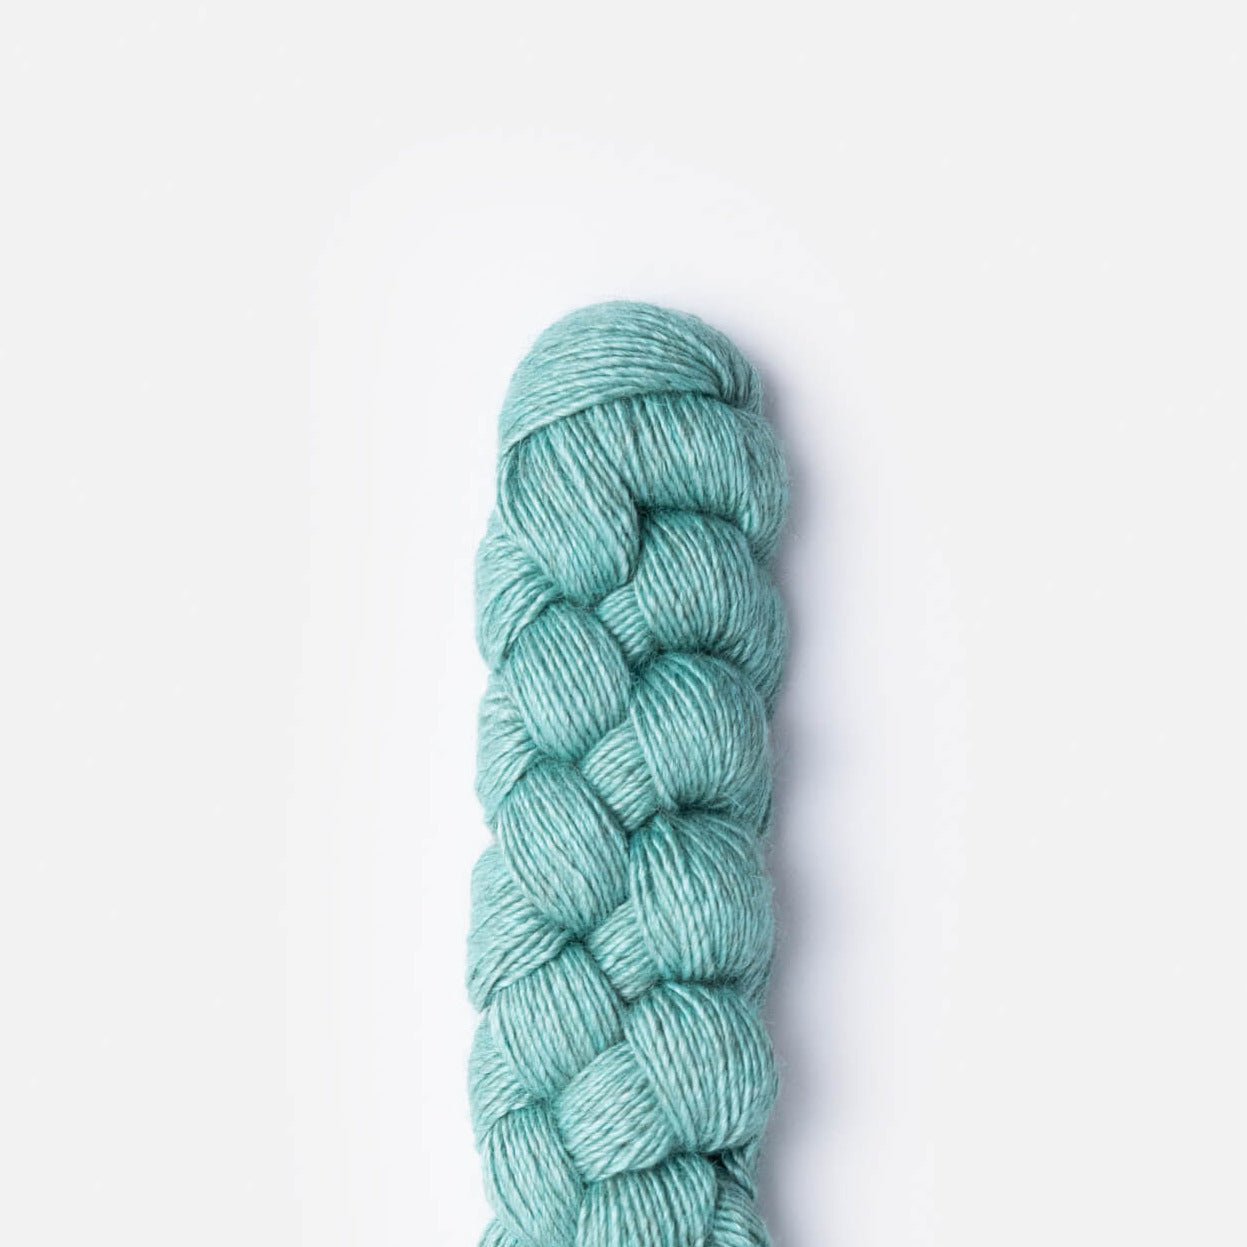 Blue Sky Fibers Metalico - 1635 Turquoise - 5 Ply - Alpaca - The Little Yarn Store